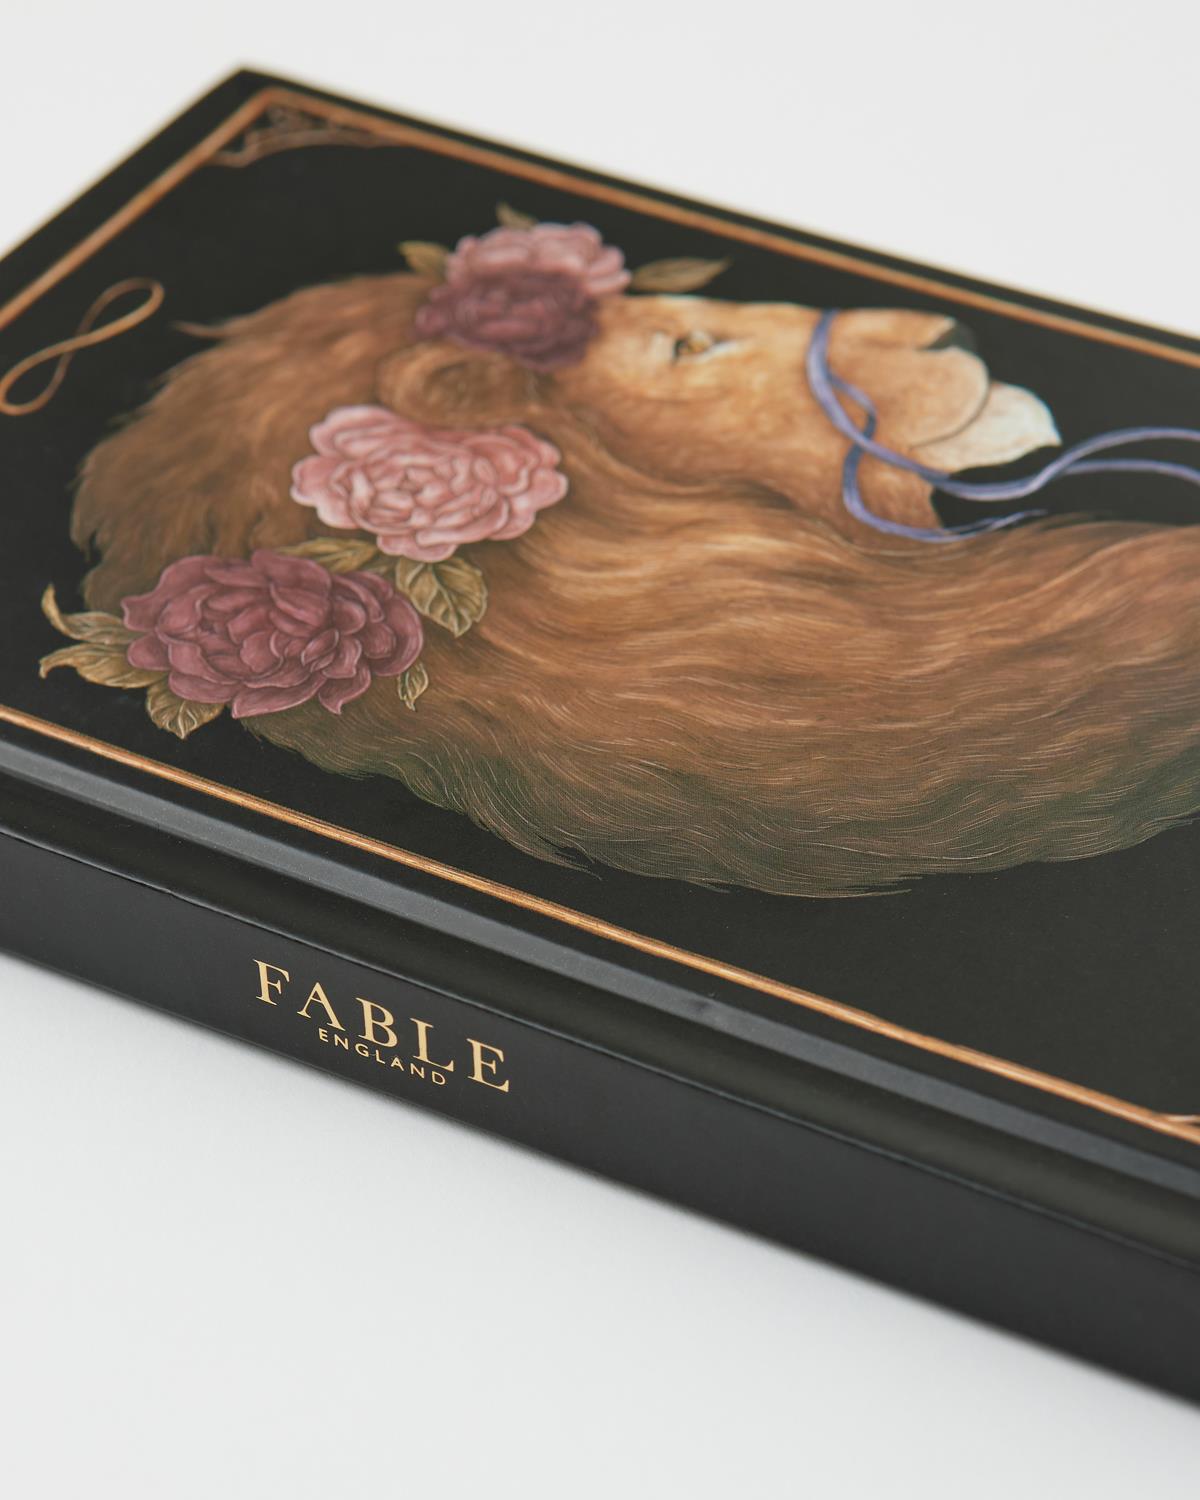 Tarot Tales Ruled Notebook - Strength